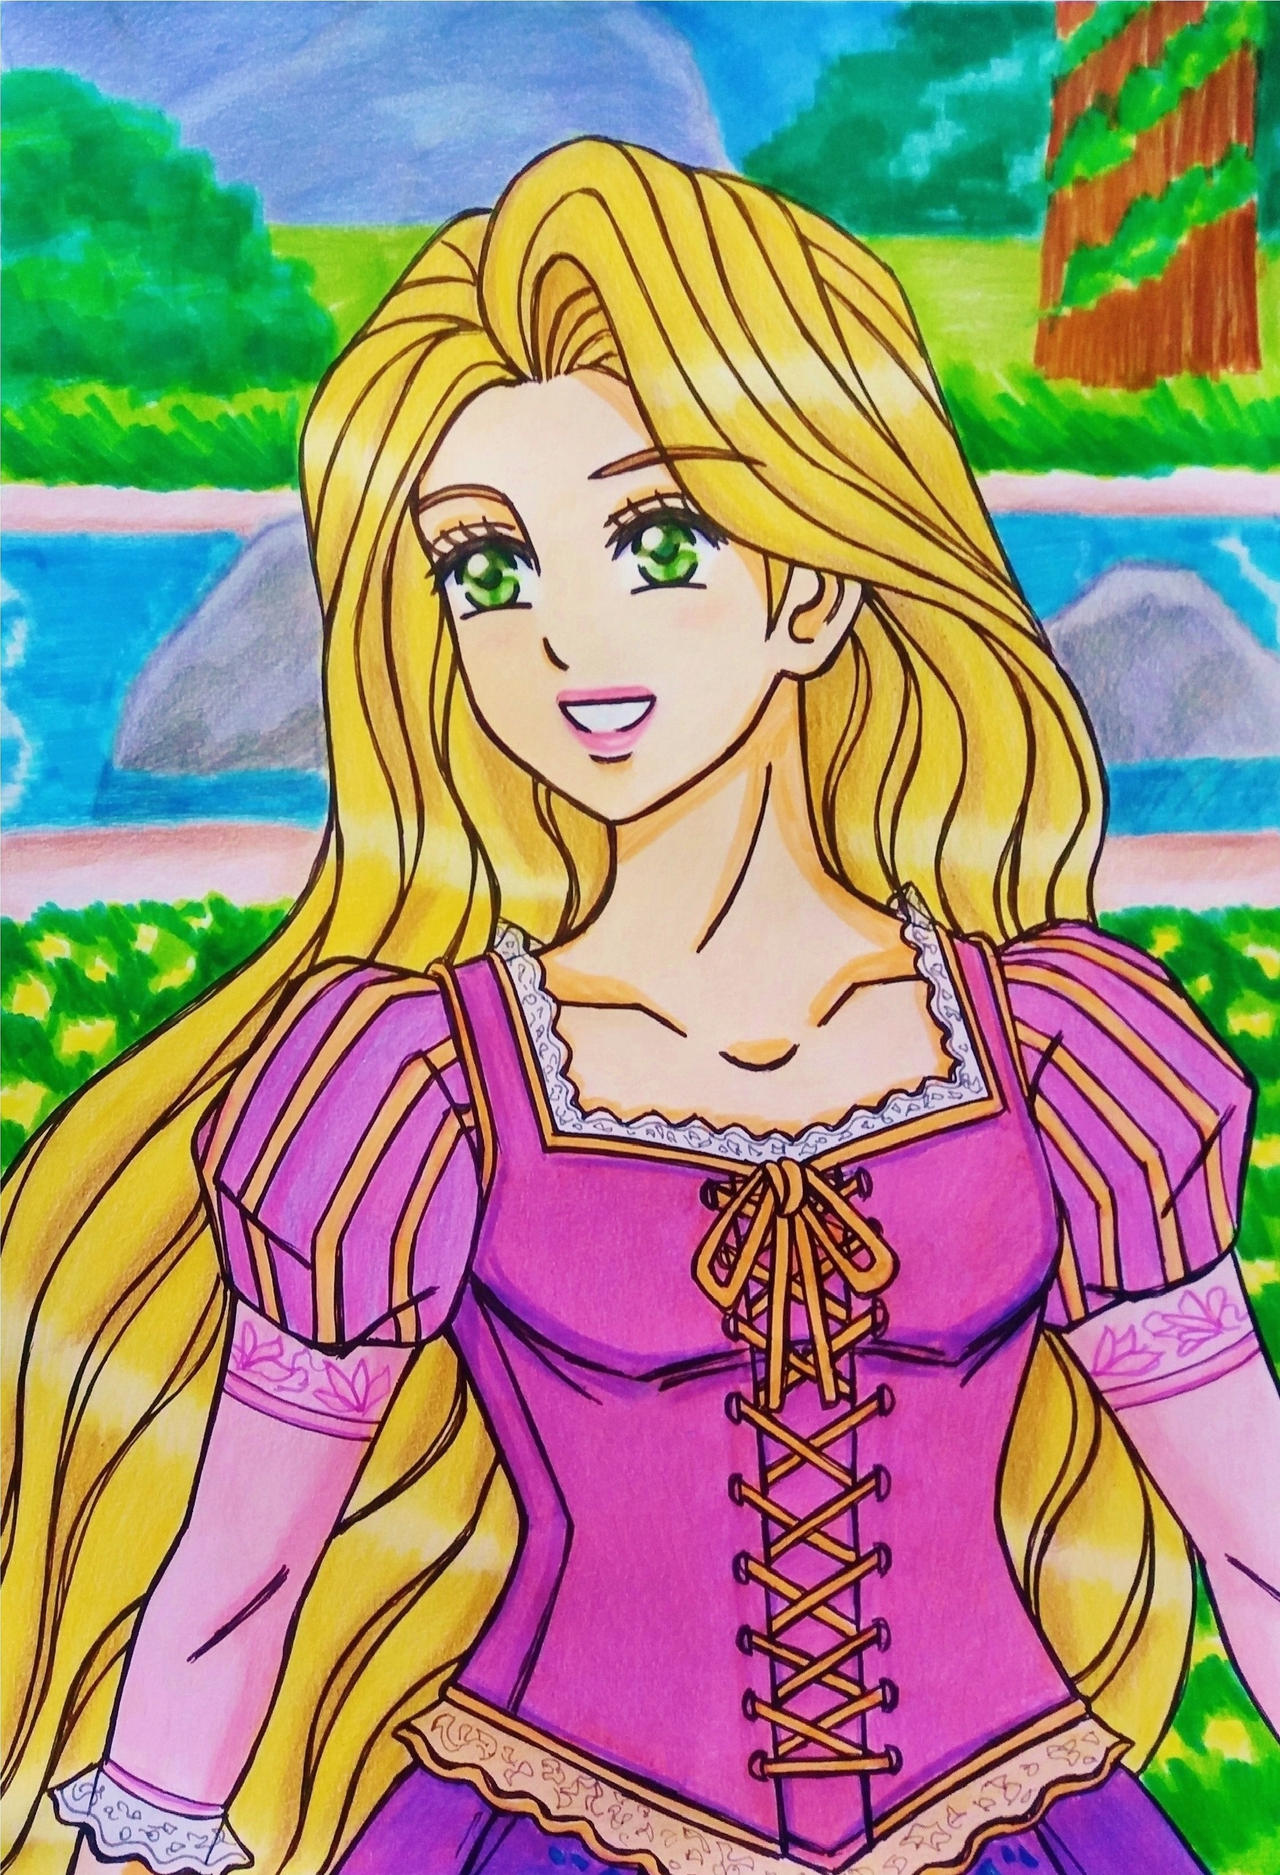 Rapunzel Disney Anime style by Dagga19 on DeviantArt